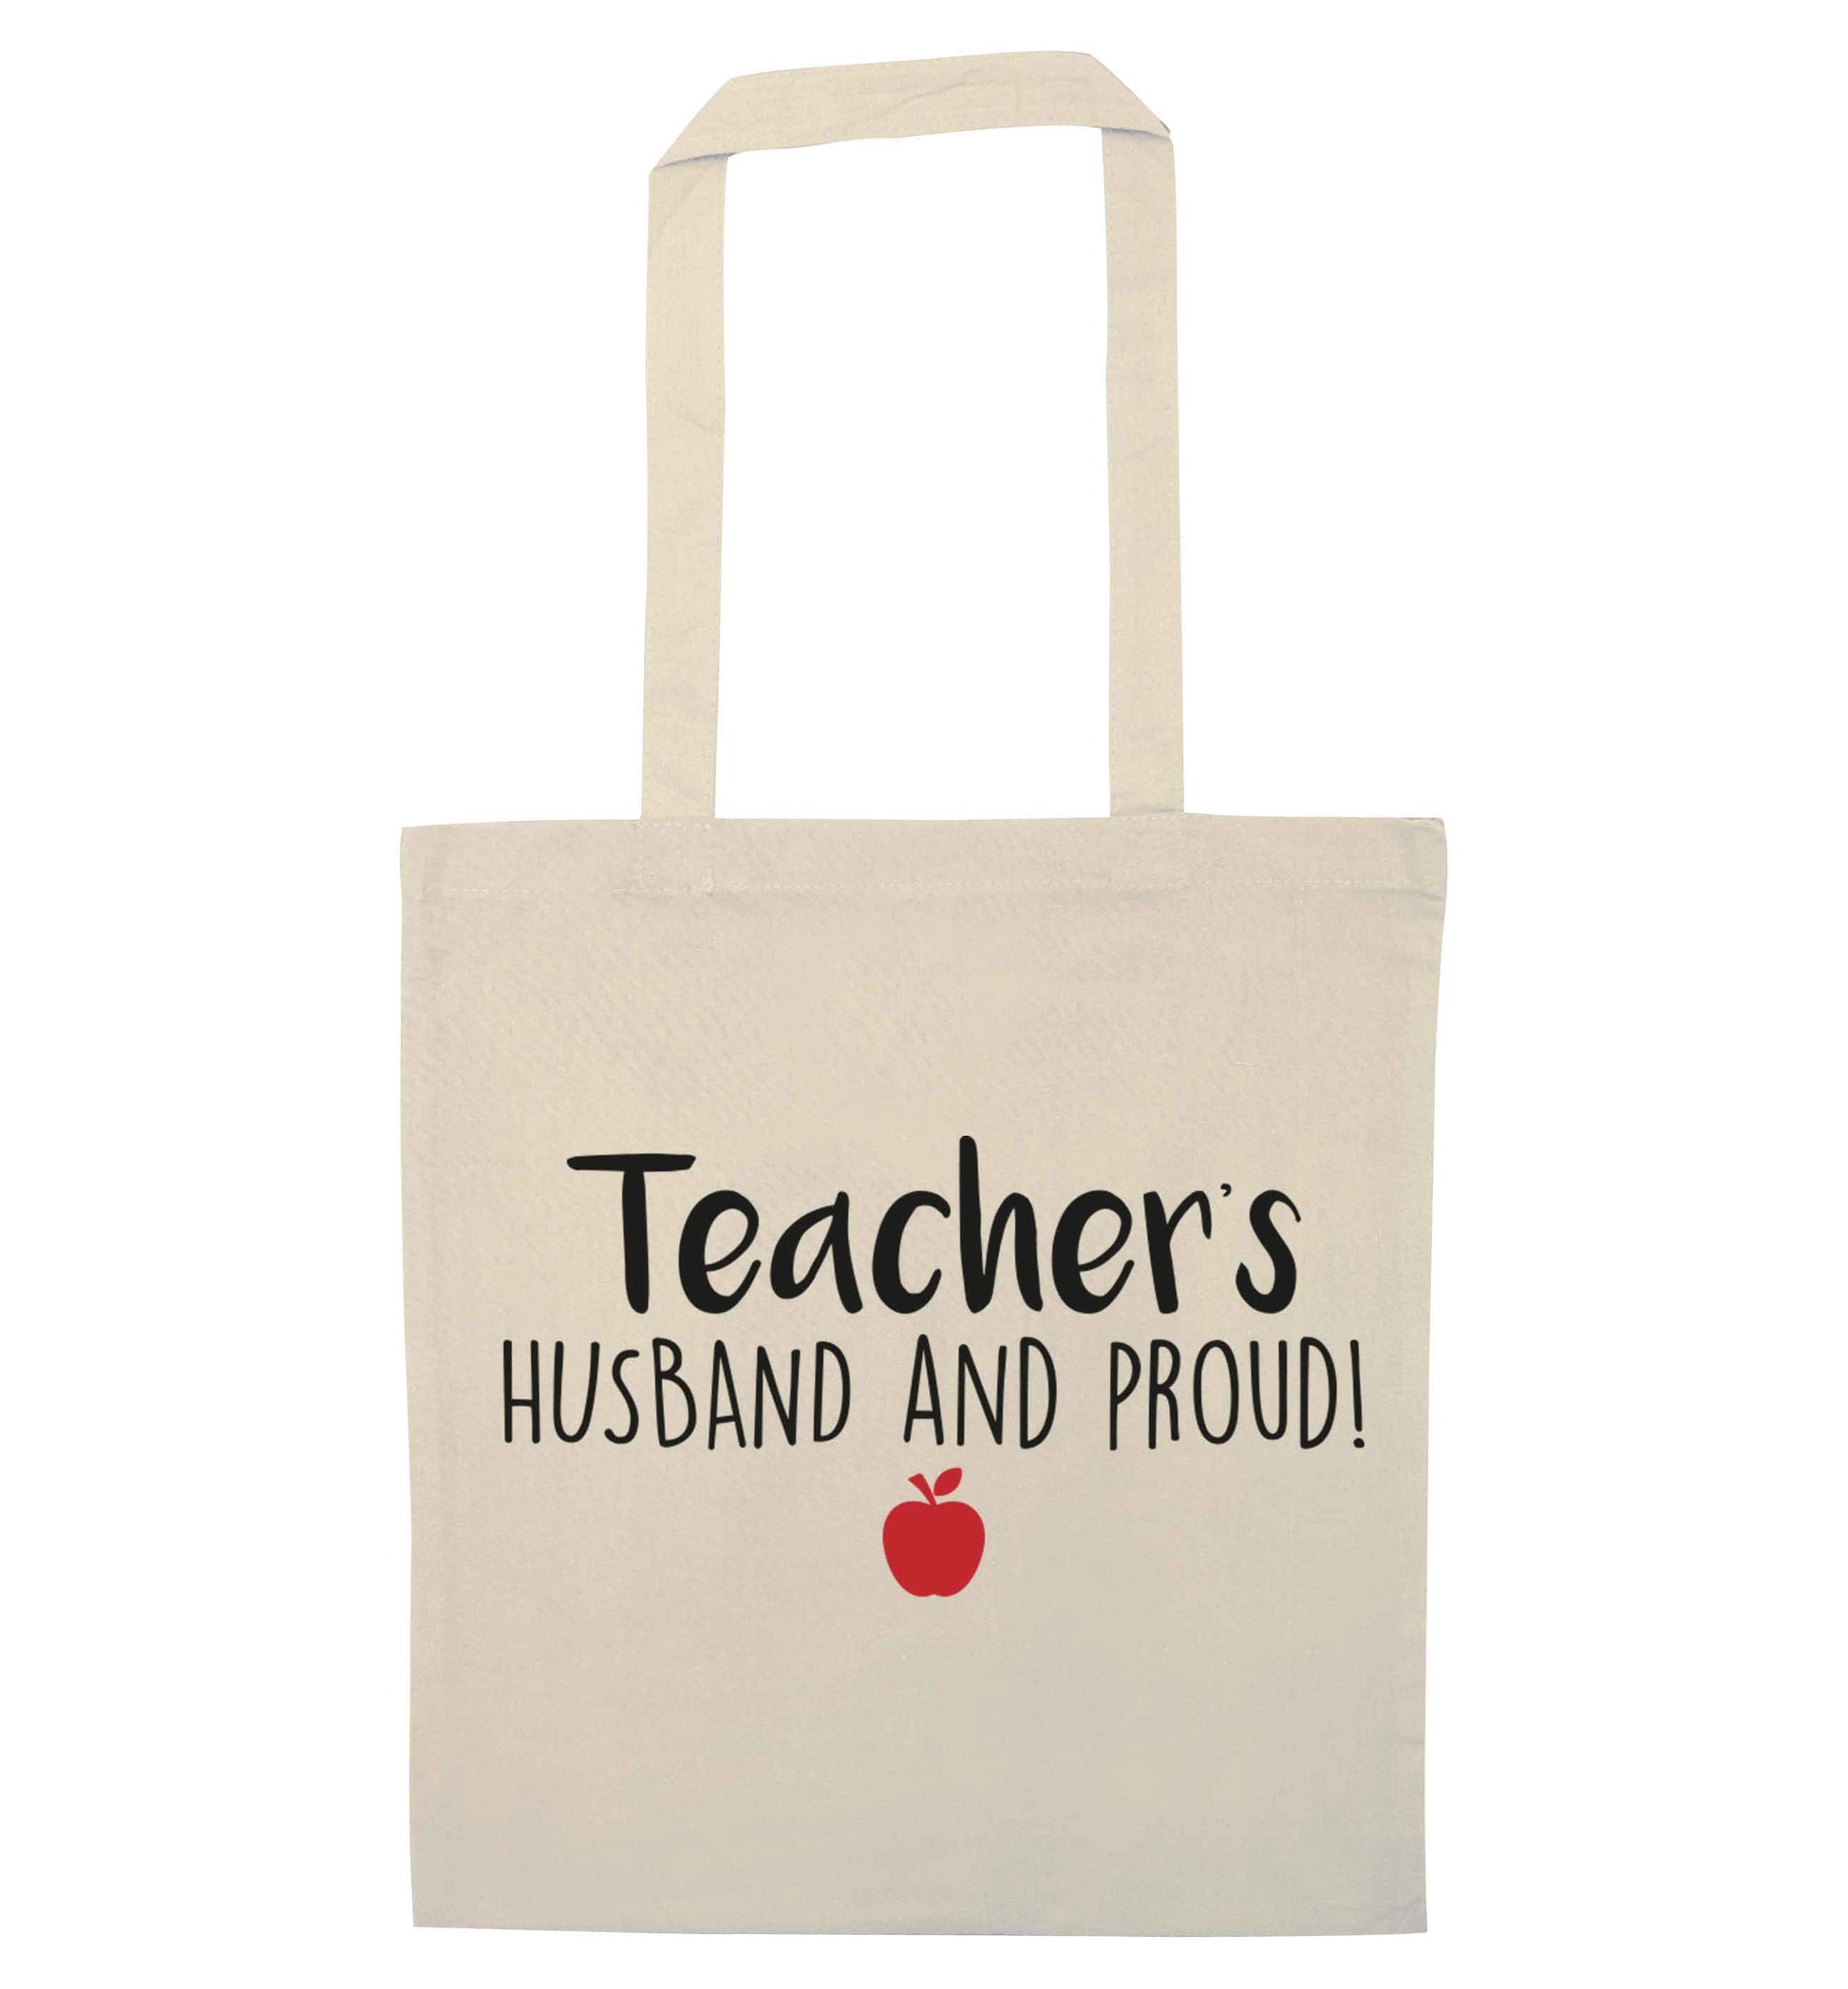 Teachers husband and proud natural tote bag